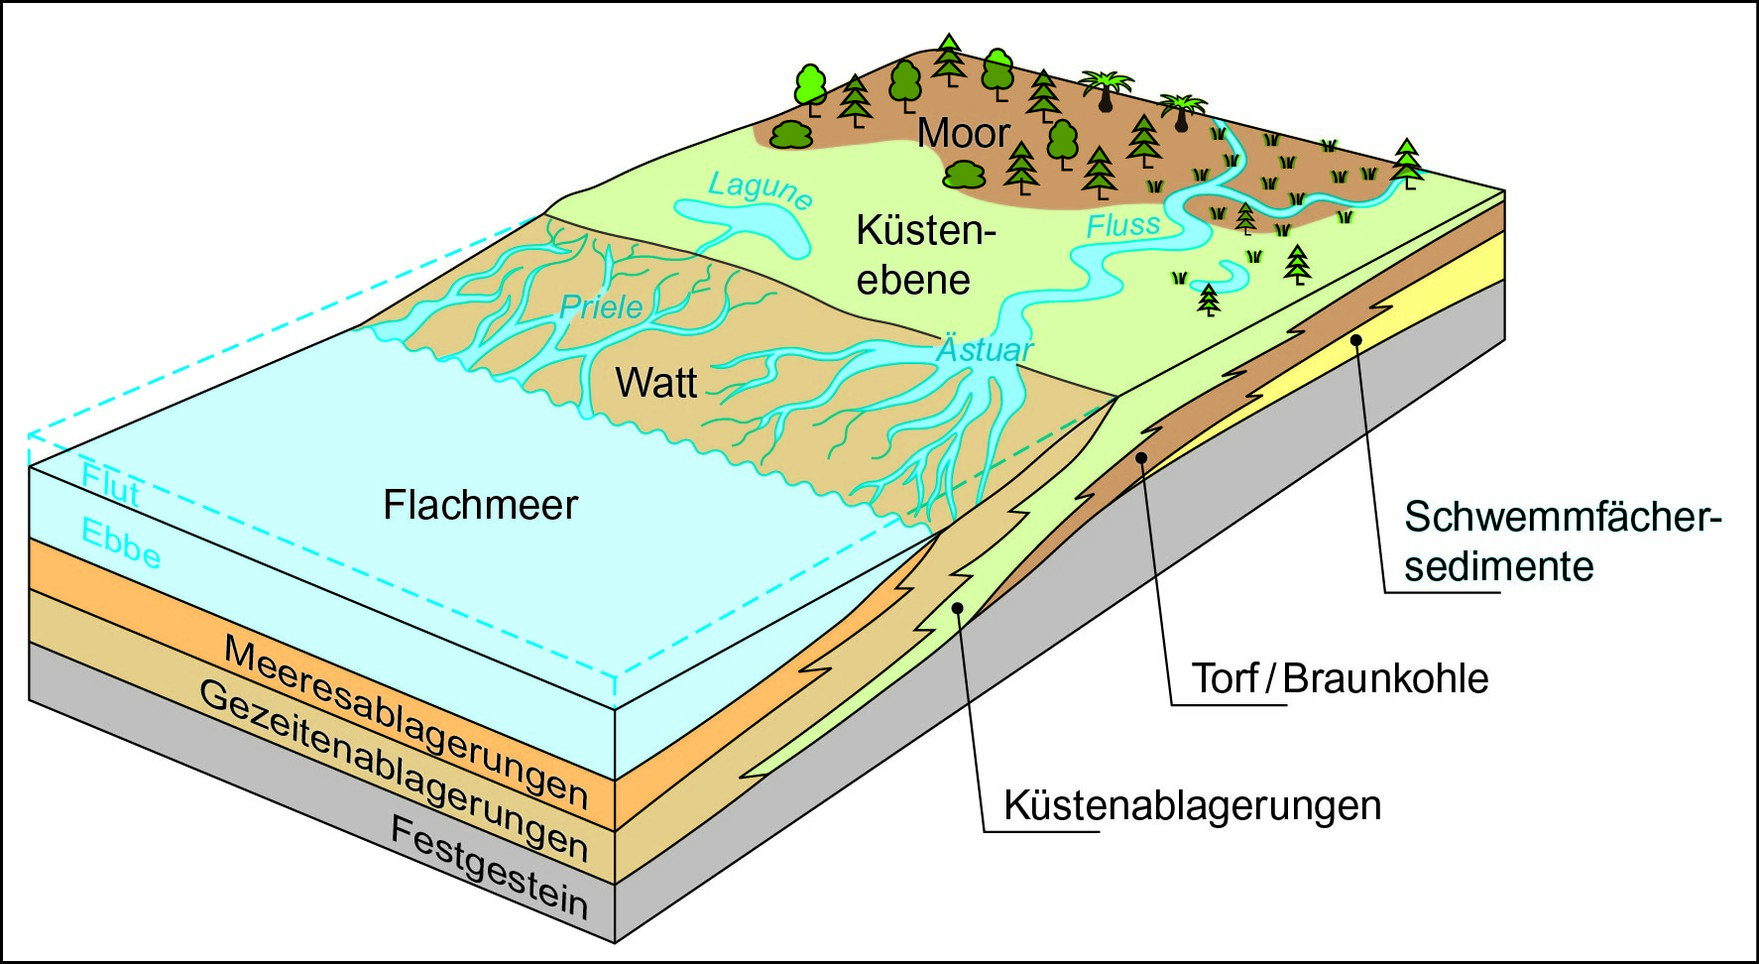 Blockbild der sedimentären Faziesbereiche des Tertiärs.